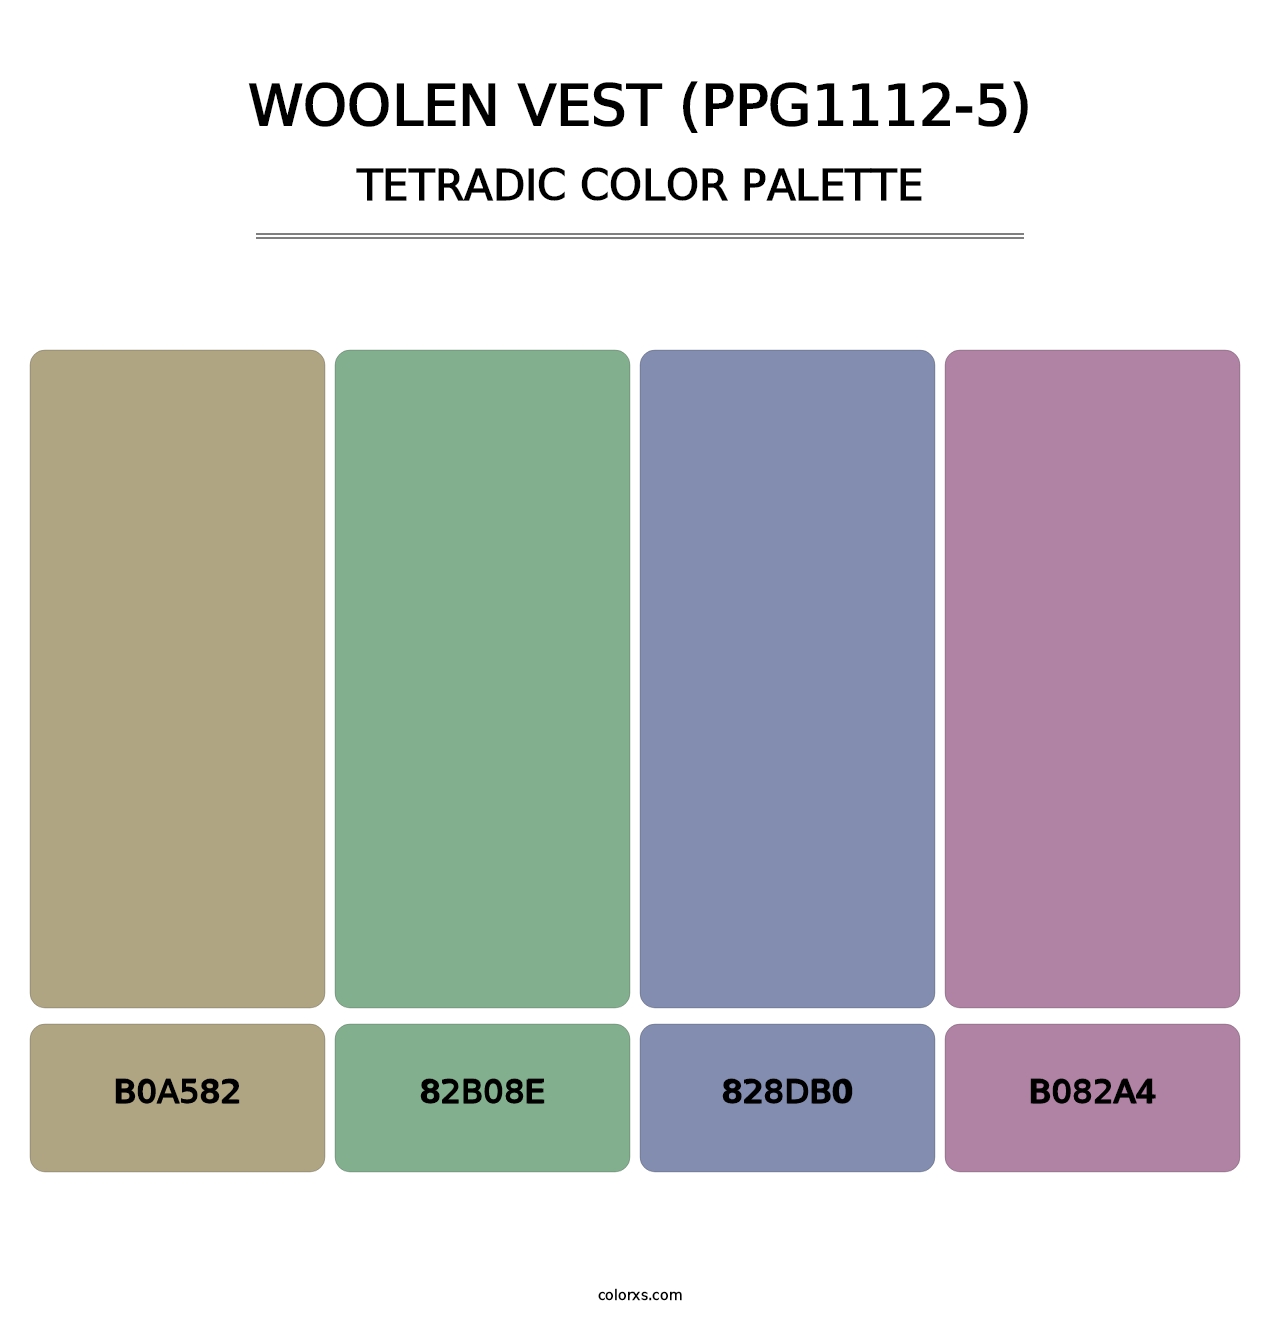 Woolen Vest (PPG1112-5) - Tetradic Color Palette